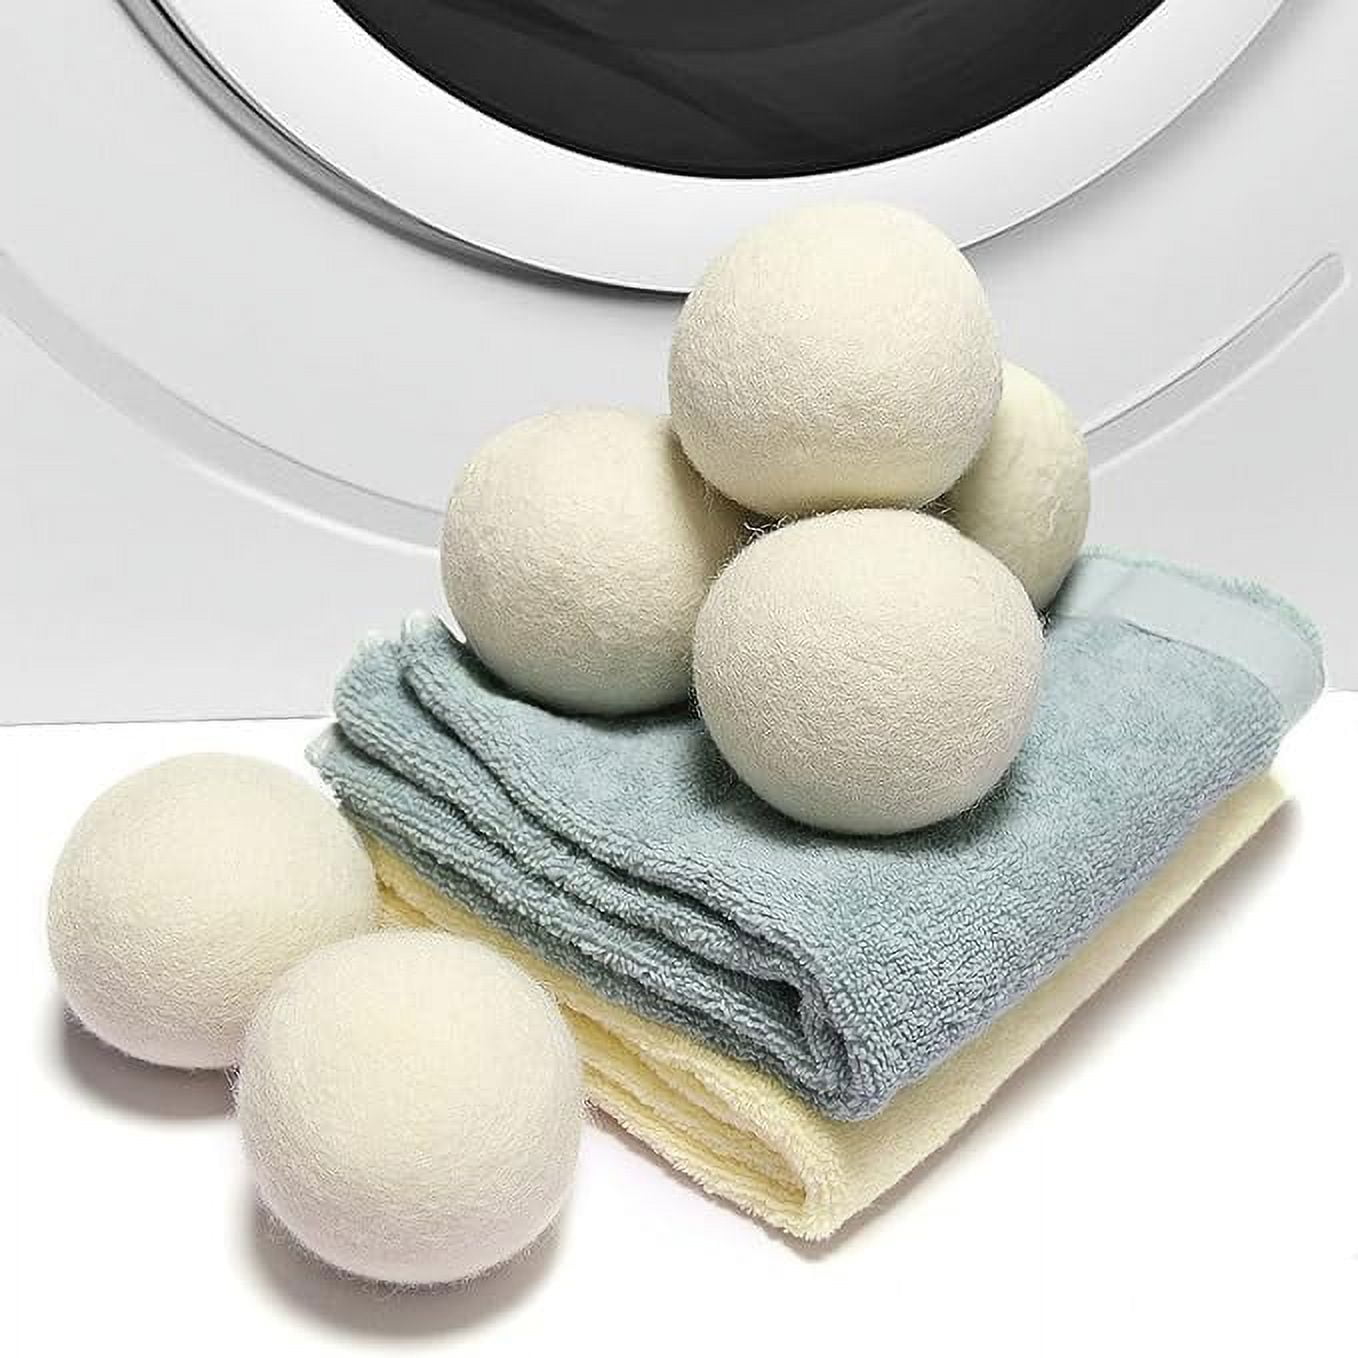  SJ Globals Wool Dryer Balls - 6-Pack - XL Premium